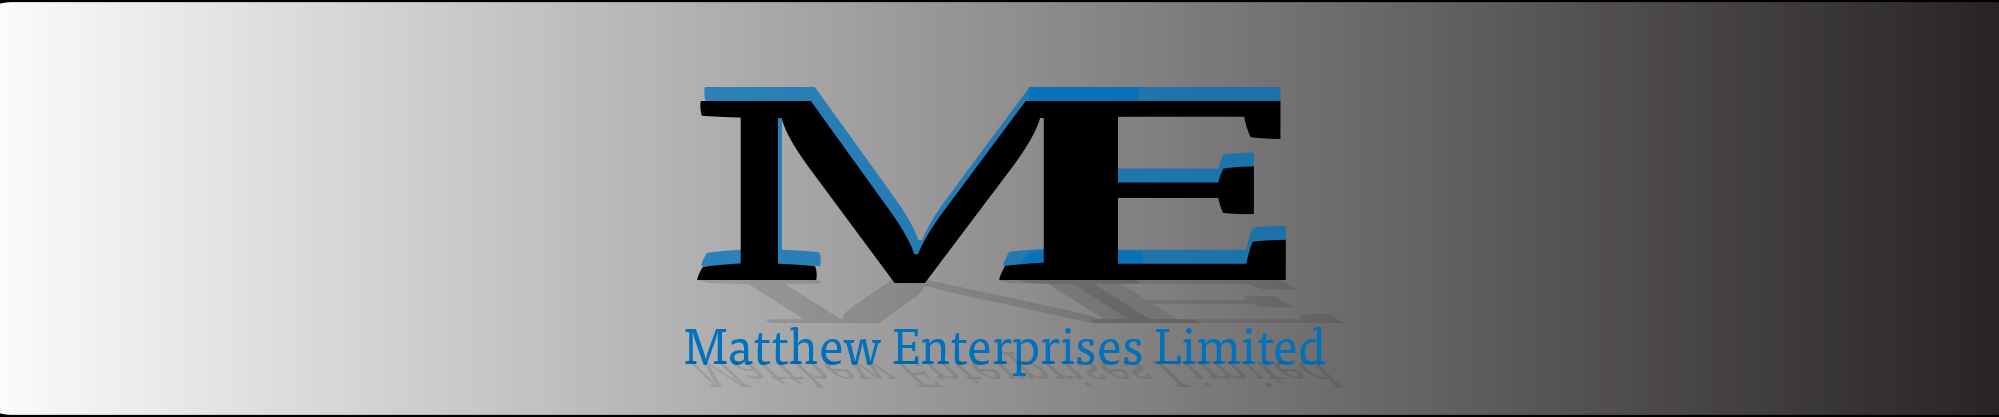 Matthew Enterprises Black and Blue Logo